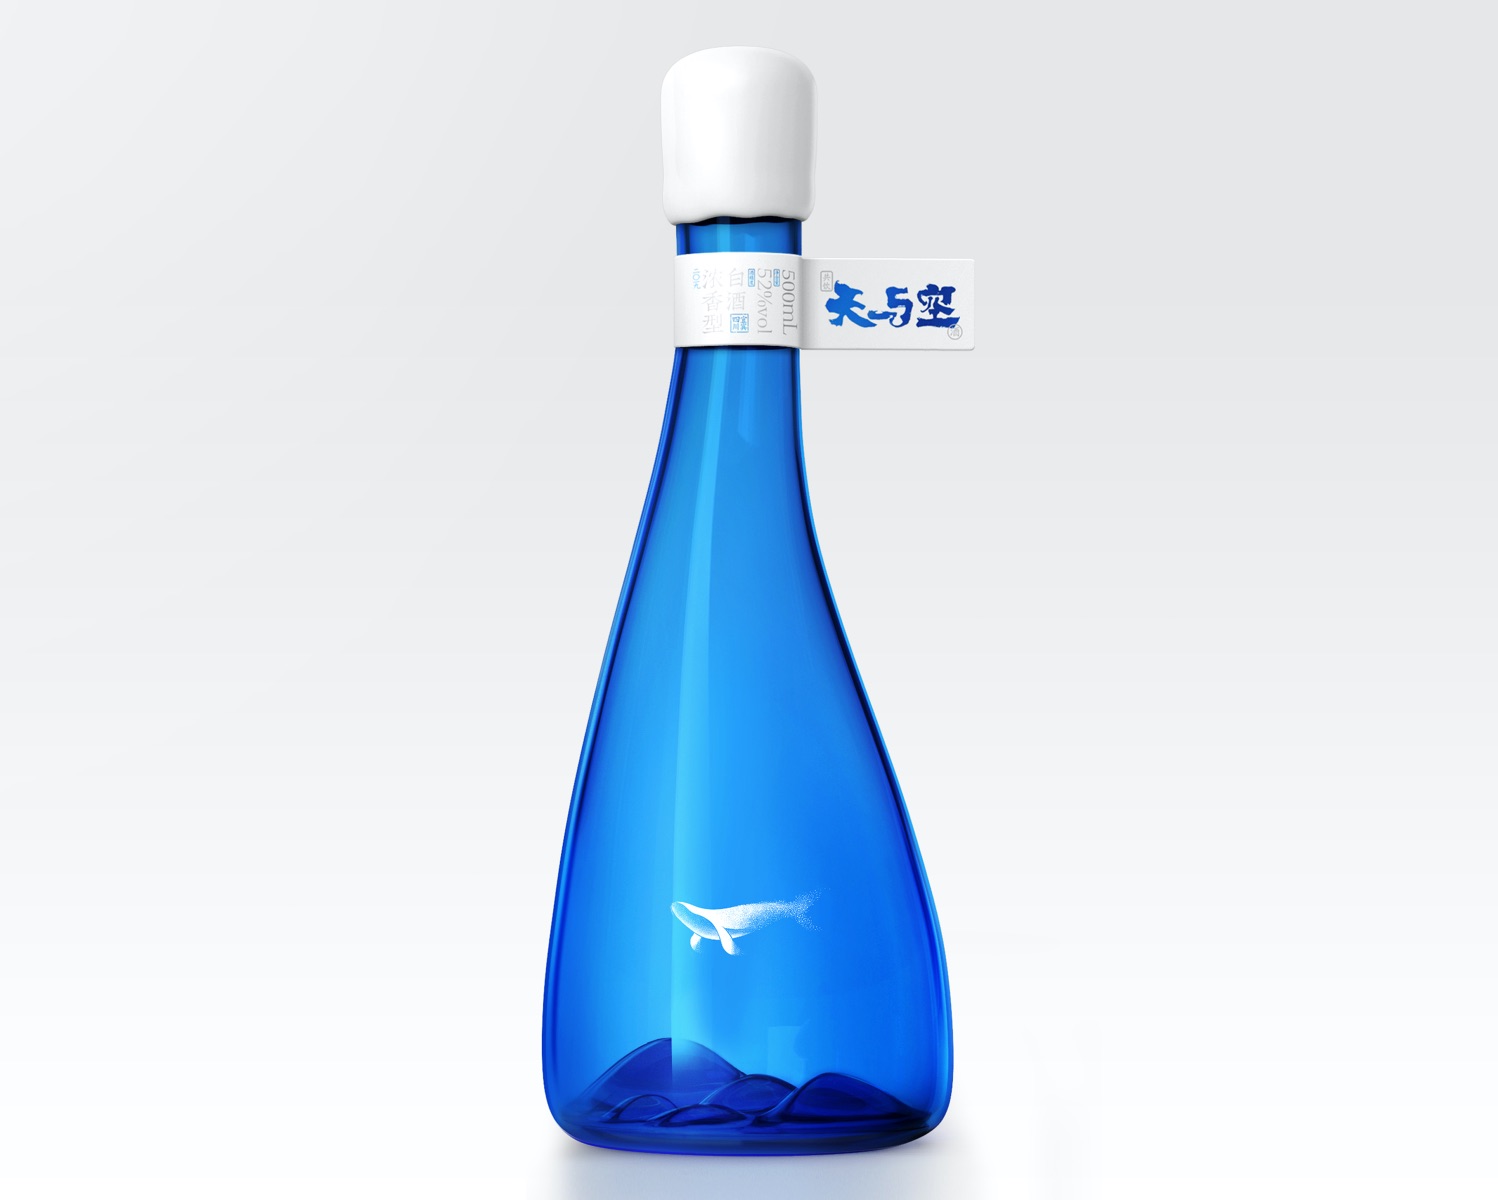 Tian and Kong Liquor Packaging Redesign